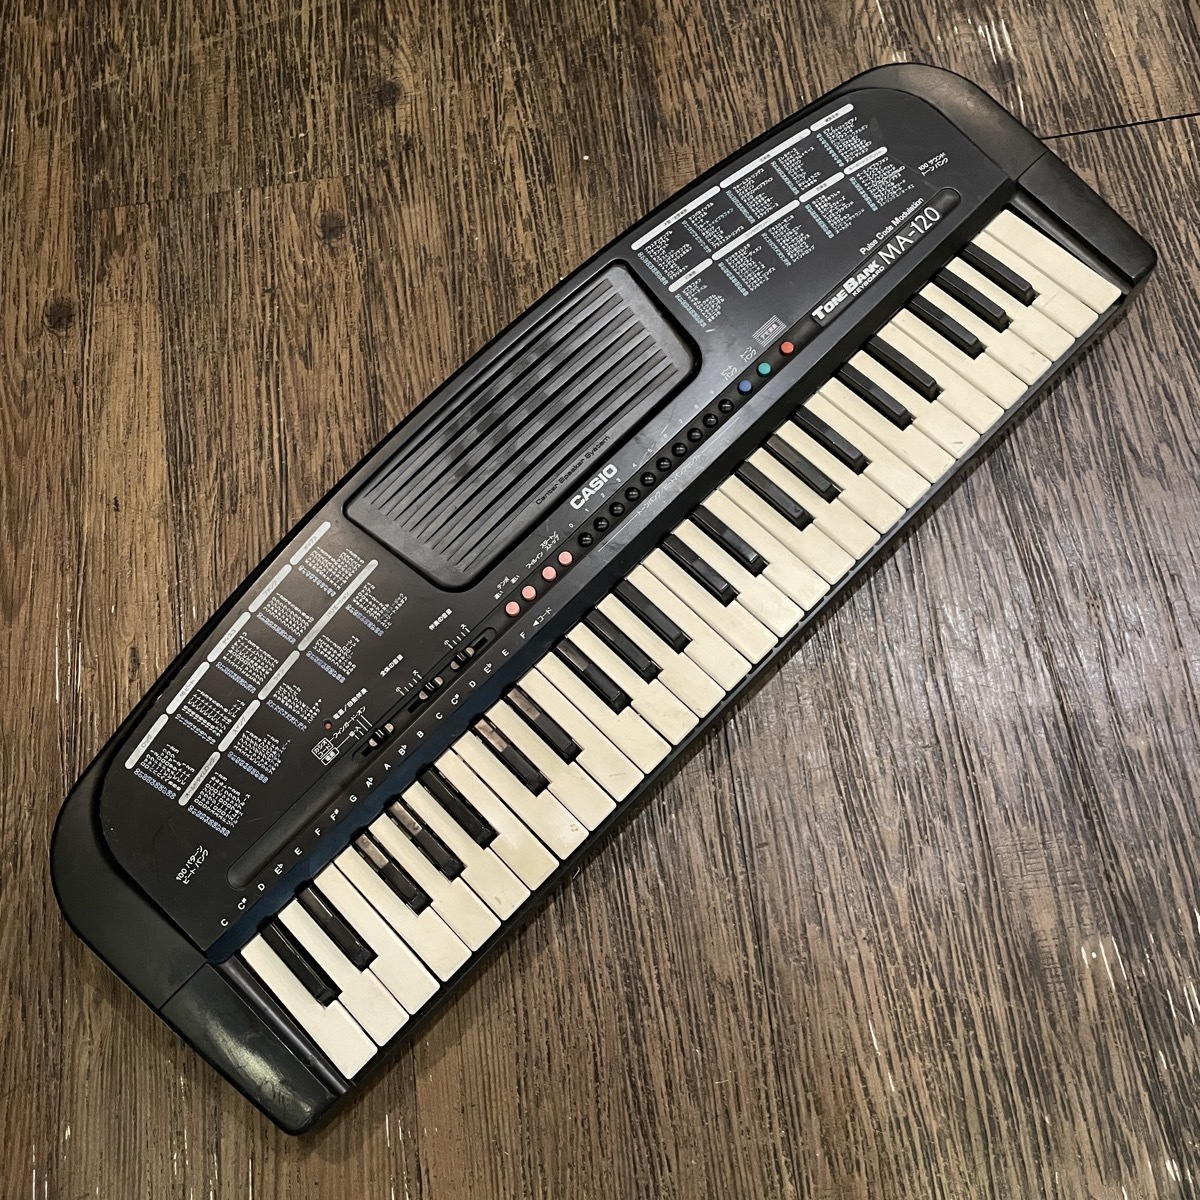 Casio MA-120 Tone Bank Keyboard keyboard Casio Junk - f985